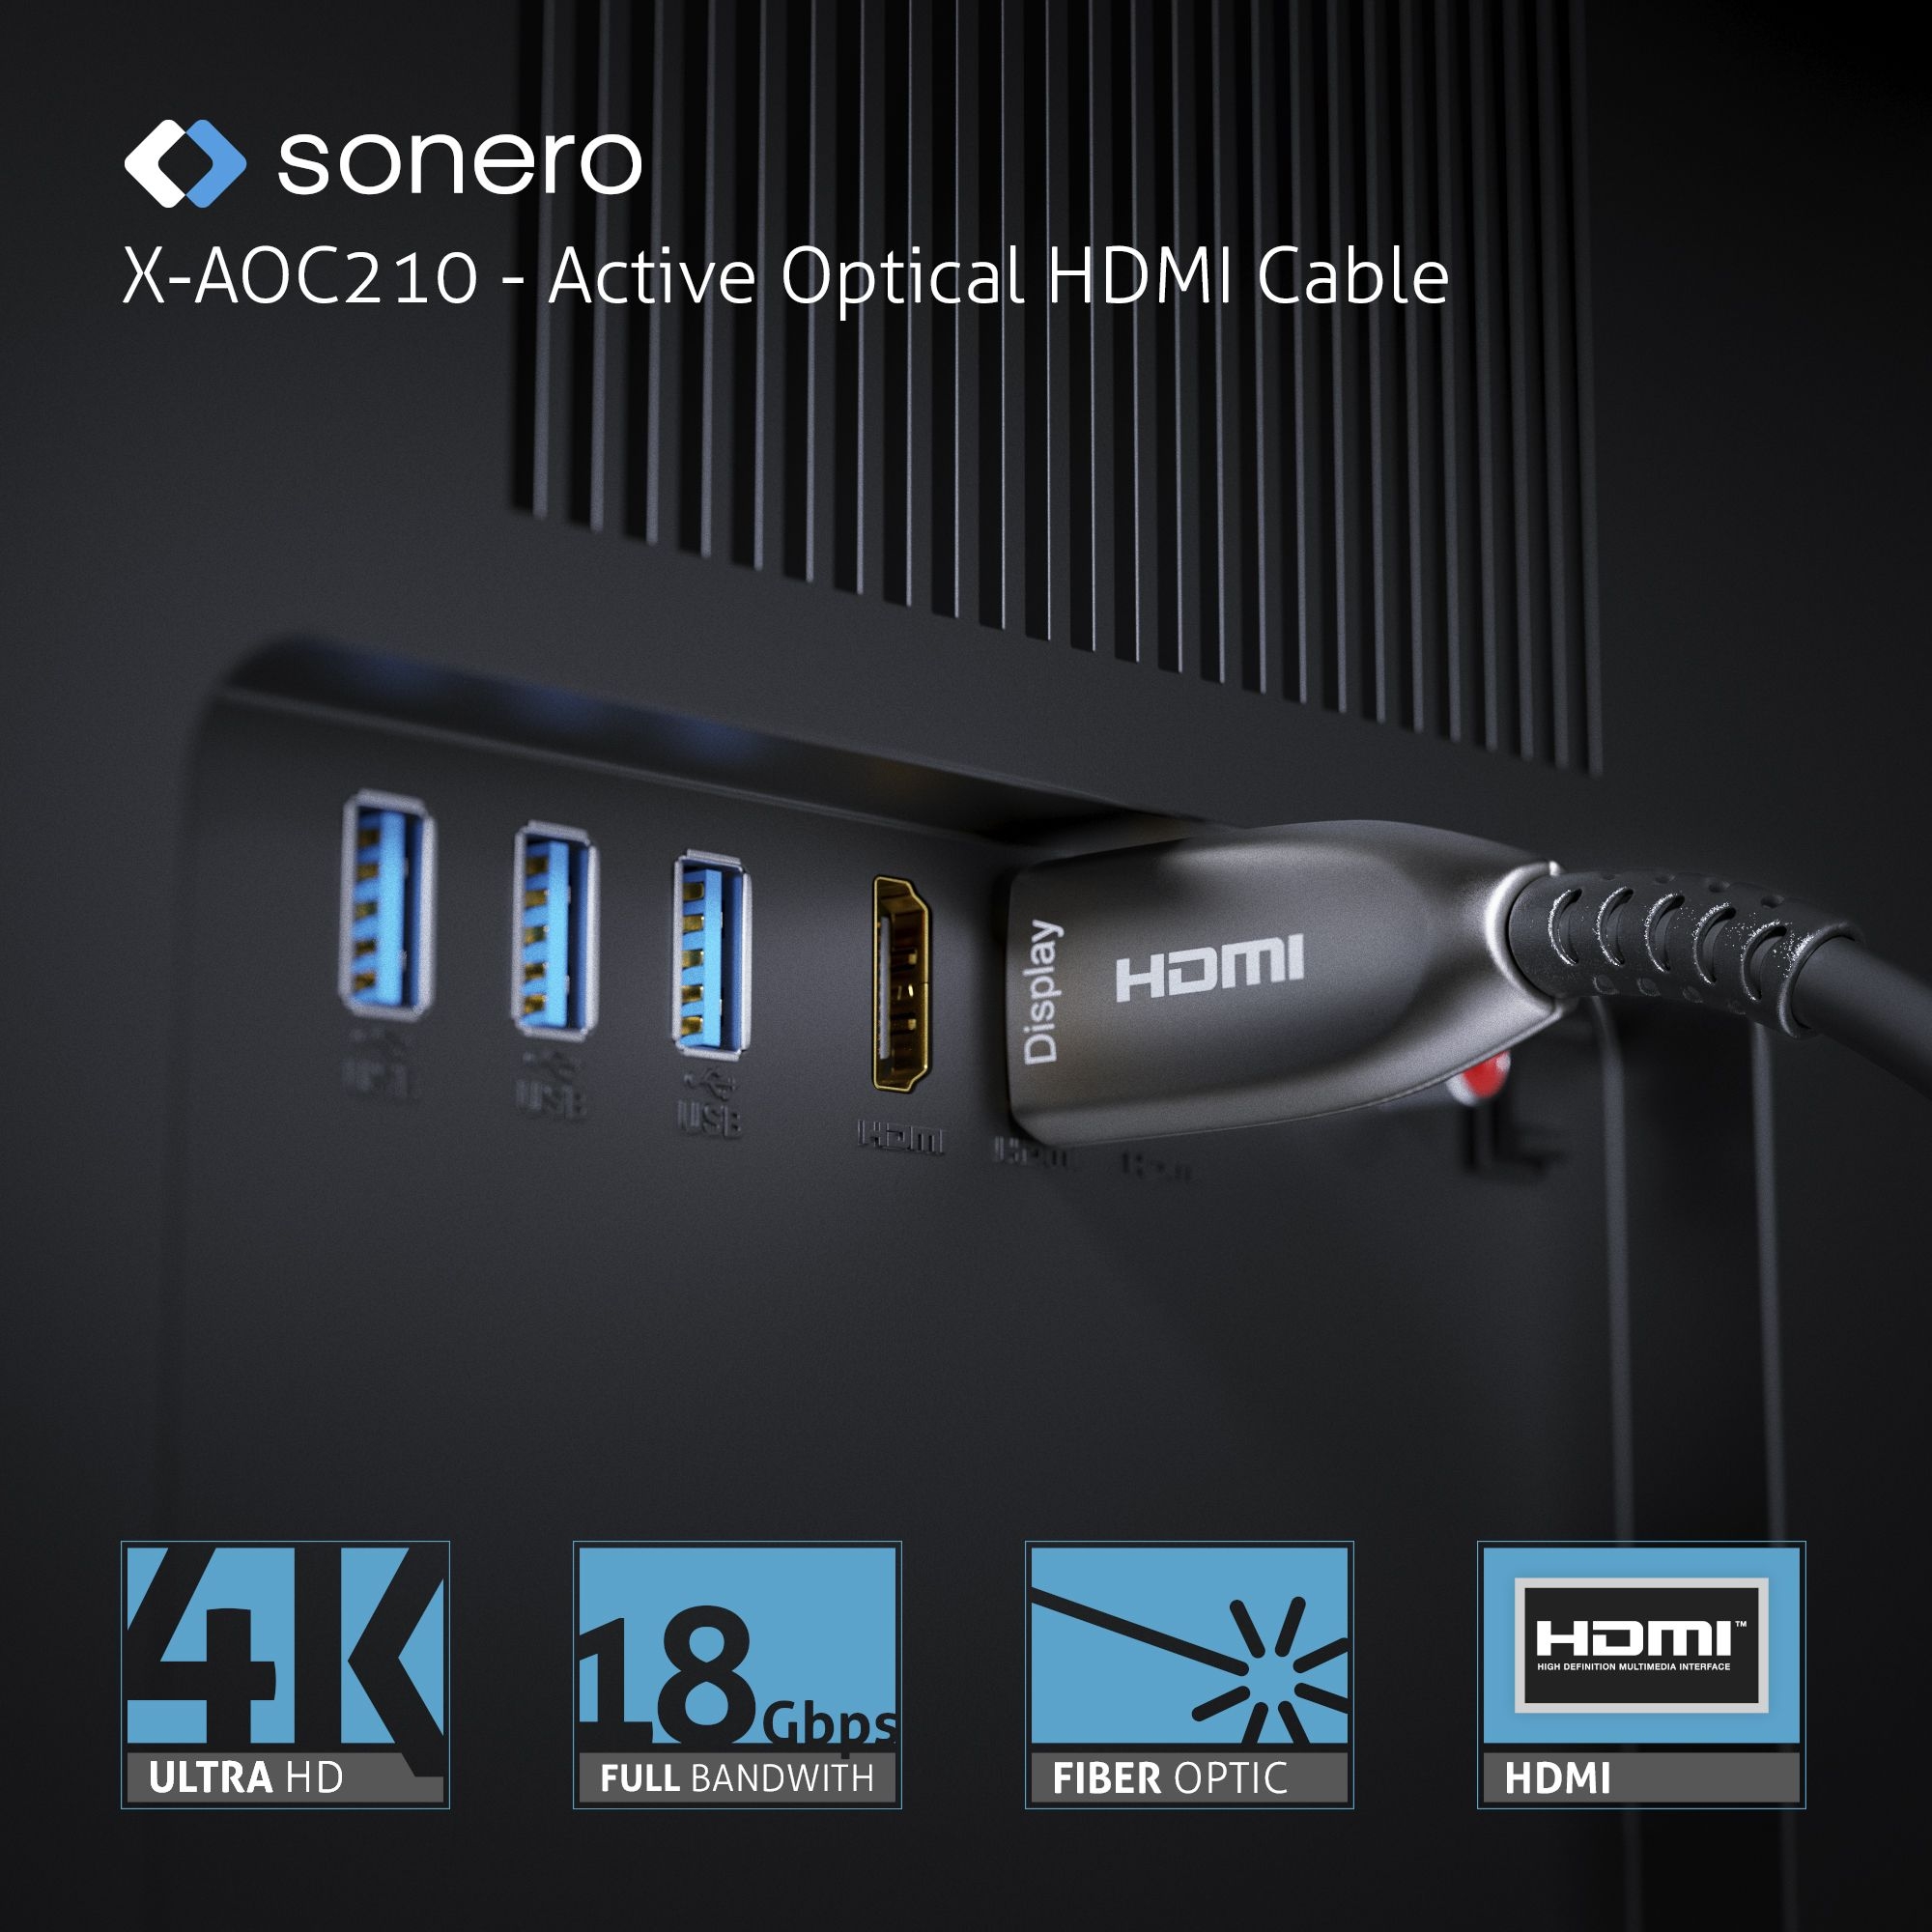 Sonero X-AOC210-300 - HDMI 4K Fibre Optic Cable - 18 Gbps - 30.0m - Black